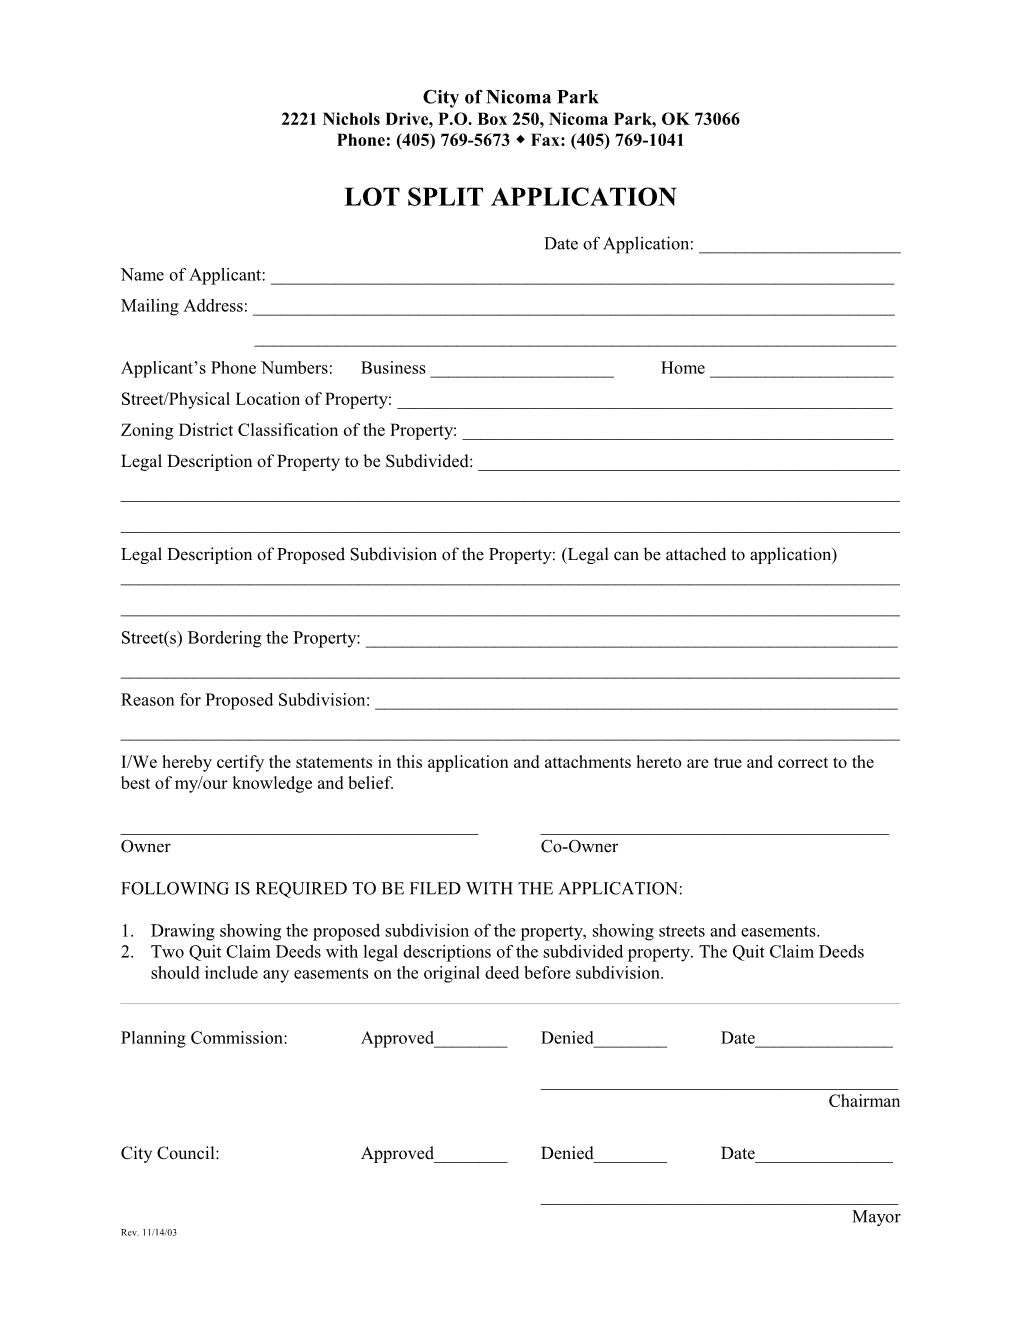 Occupancy Permit Application